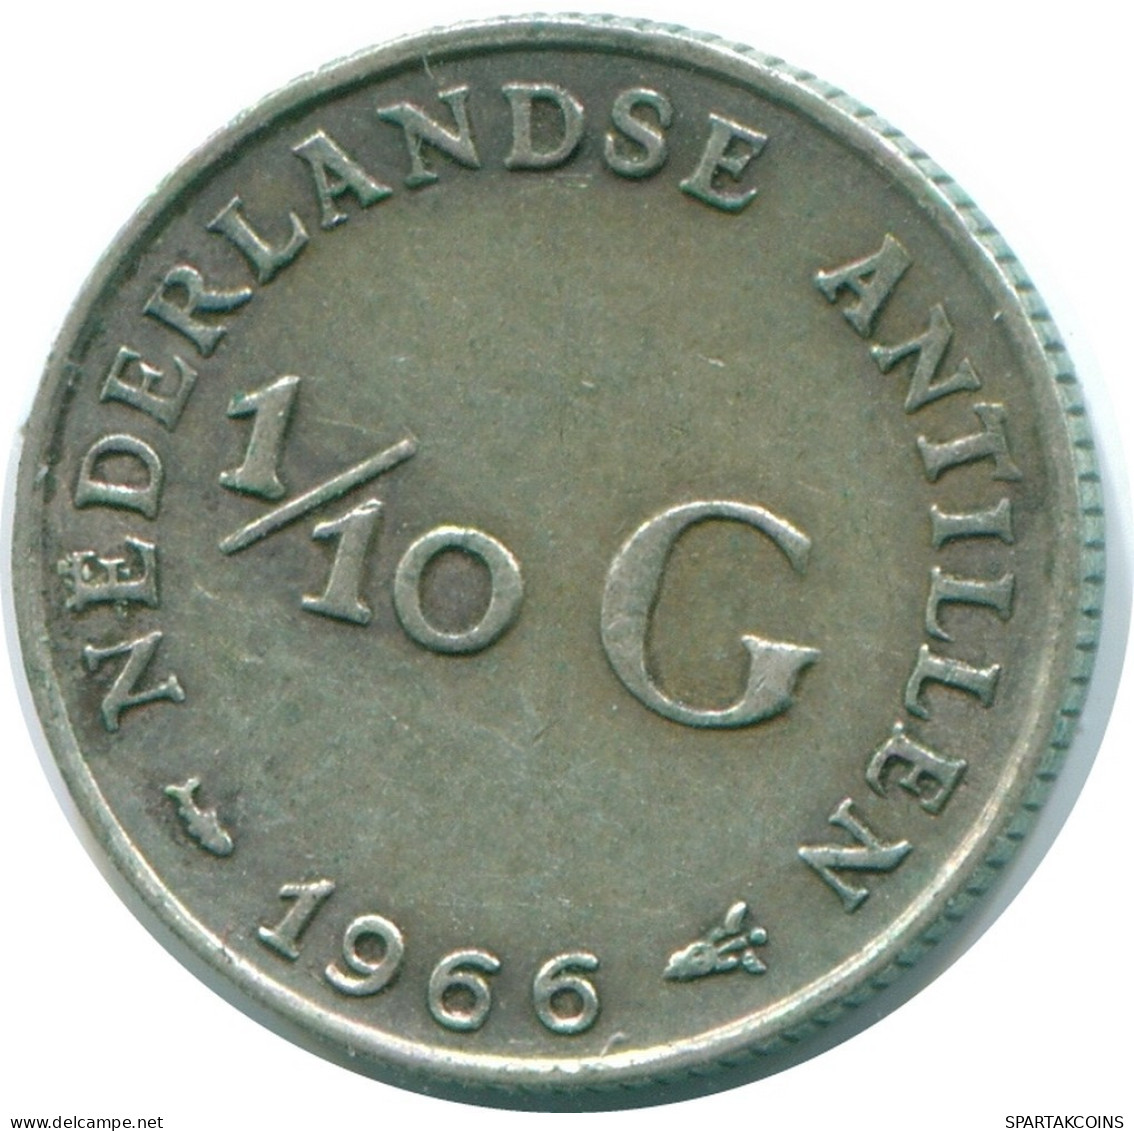 1/10 GULDEN 1966 NIEDERLÄNDISCHE ANTILLEN SILBER Koloniale Münze #NL12878.3.D.A - Netherlands Antilles